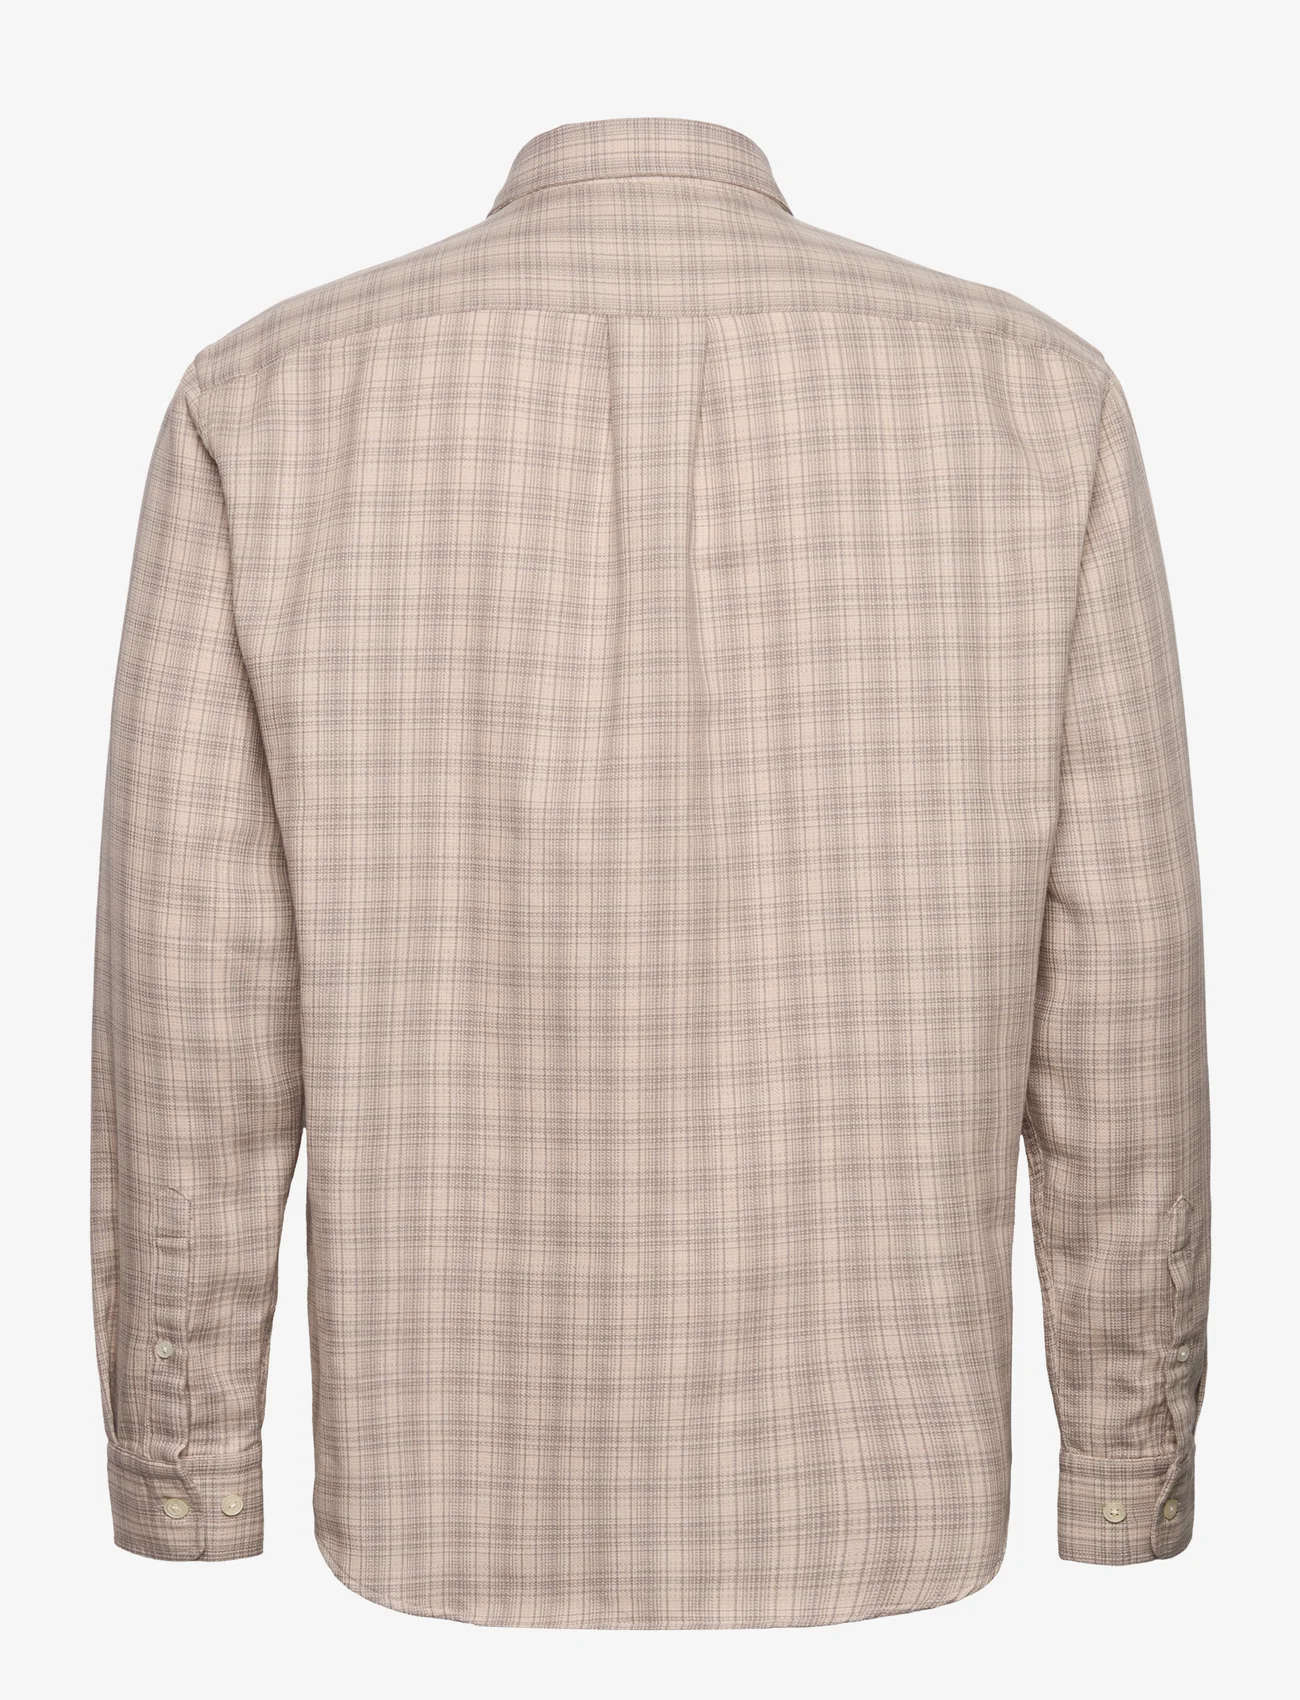 Mads Nørgaard - Summer Cotton Malte Shirt - rutiga skjortor - rainy day/vintage khaki - 1